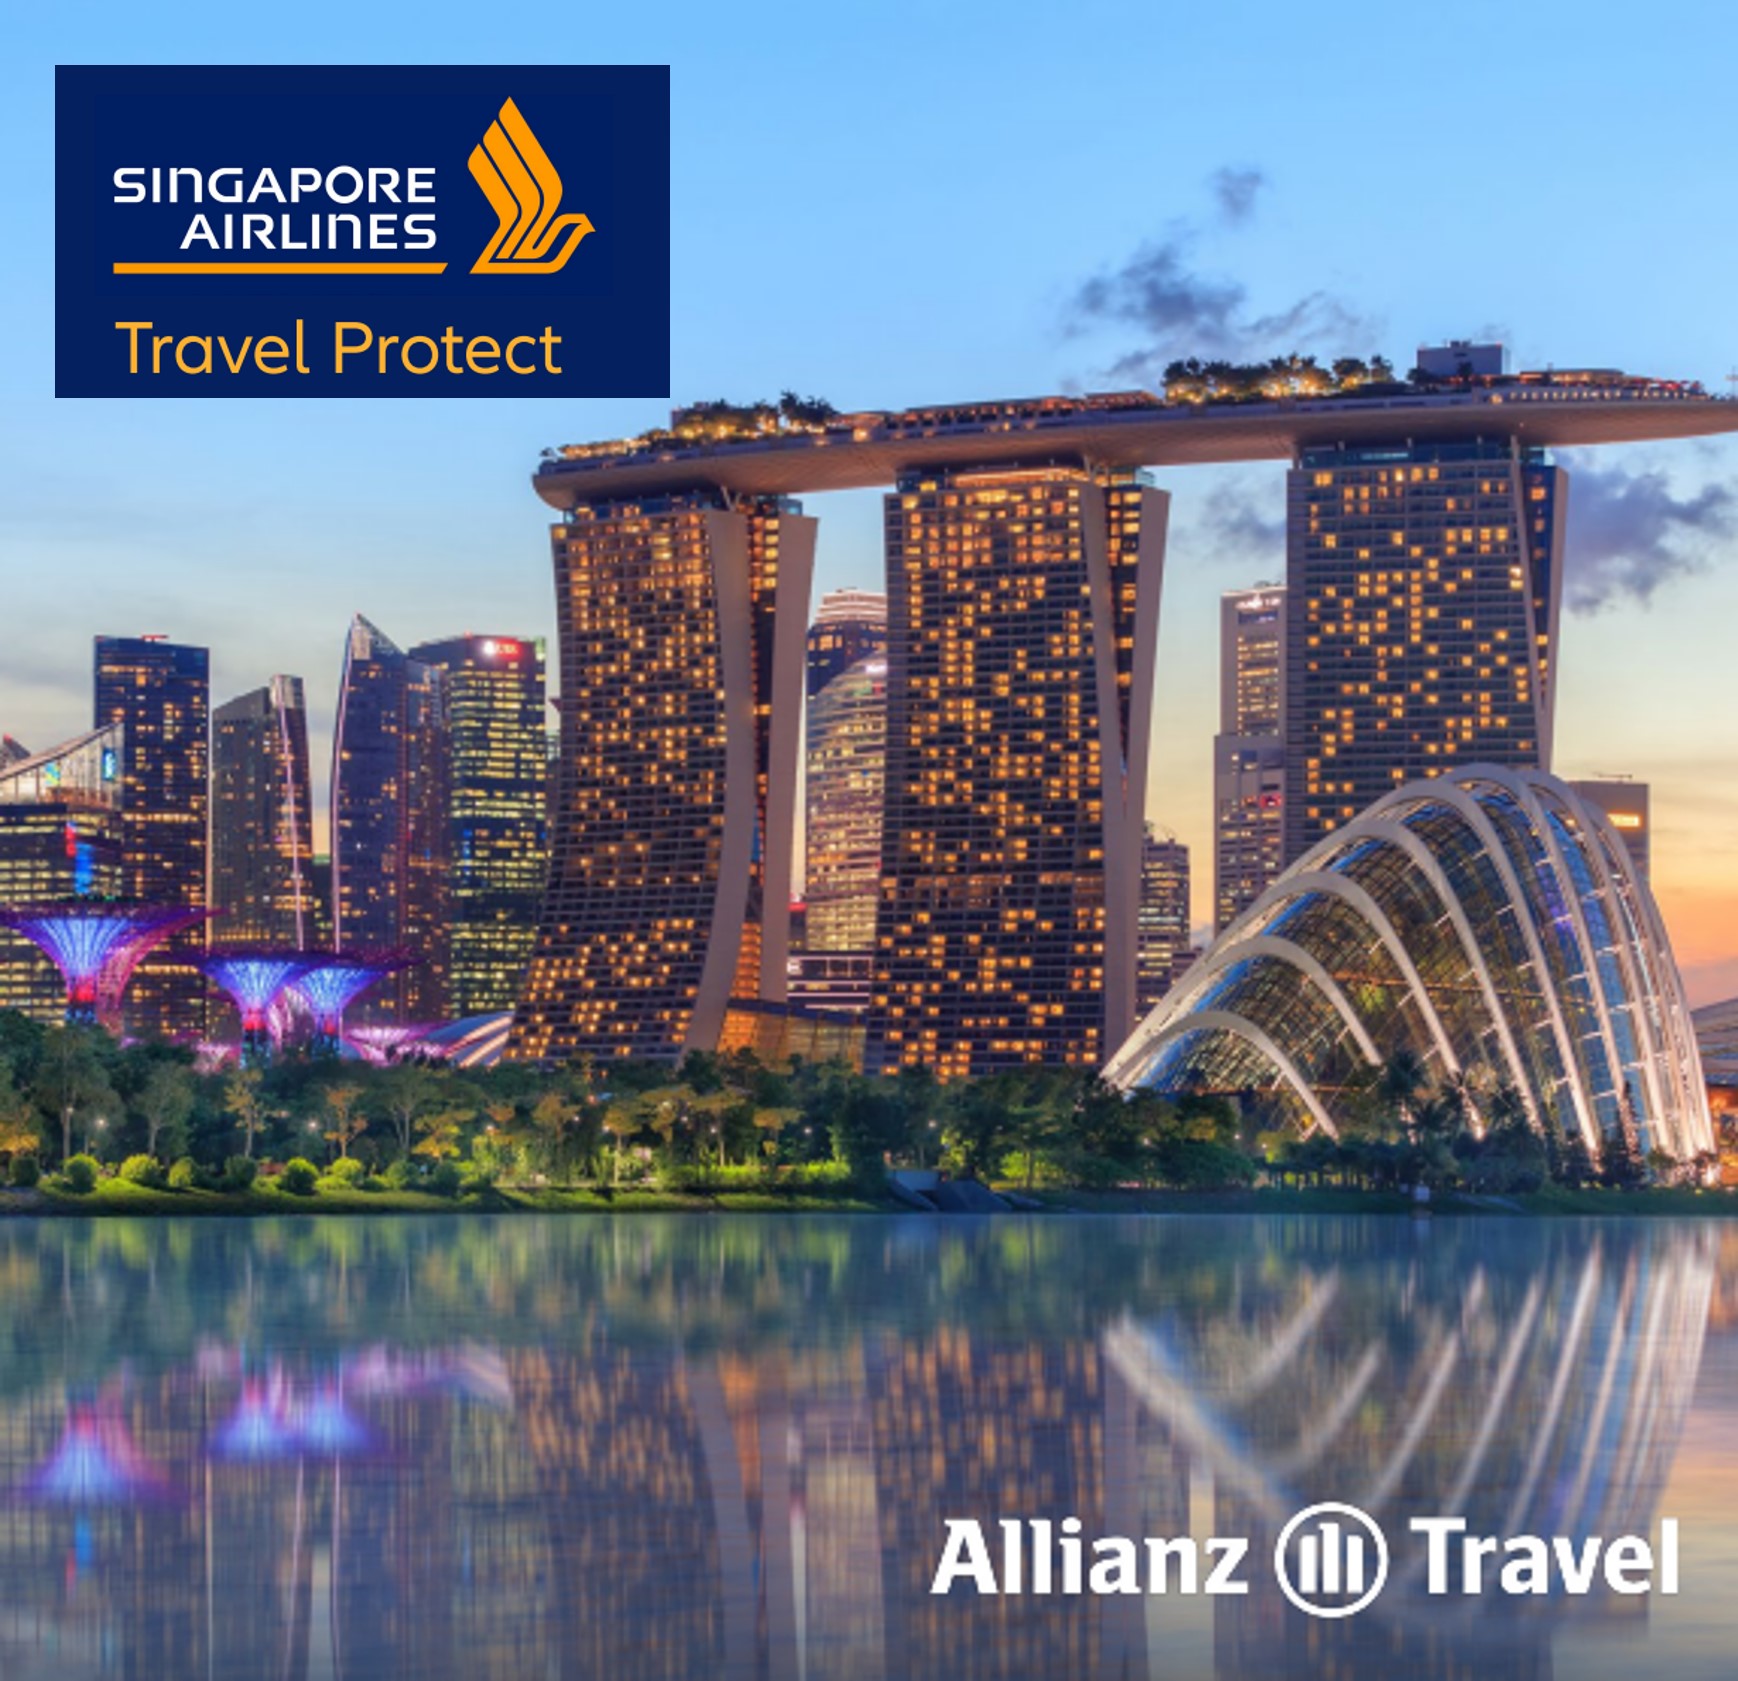 singapore travel insurance reviews